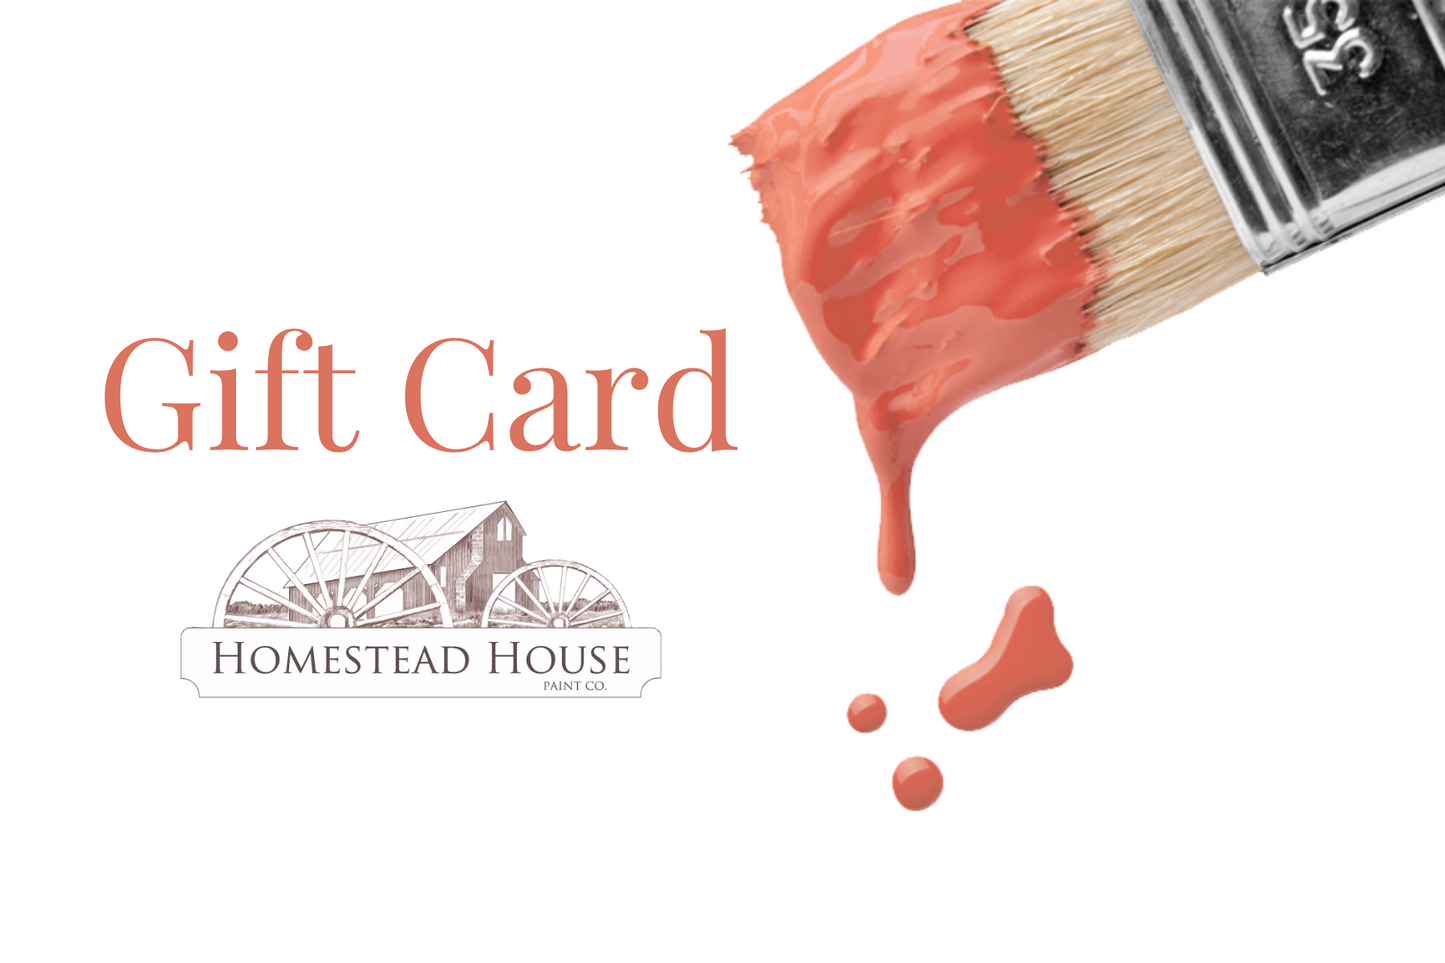 Homestead House Gift Card